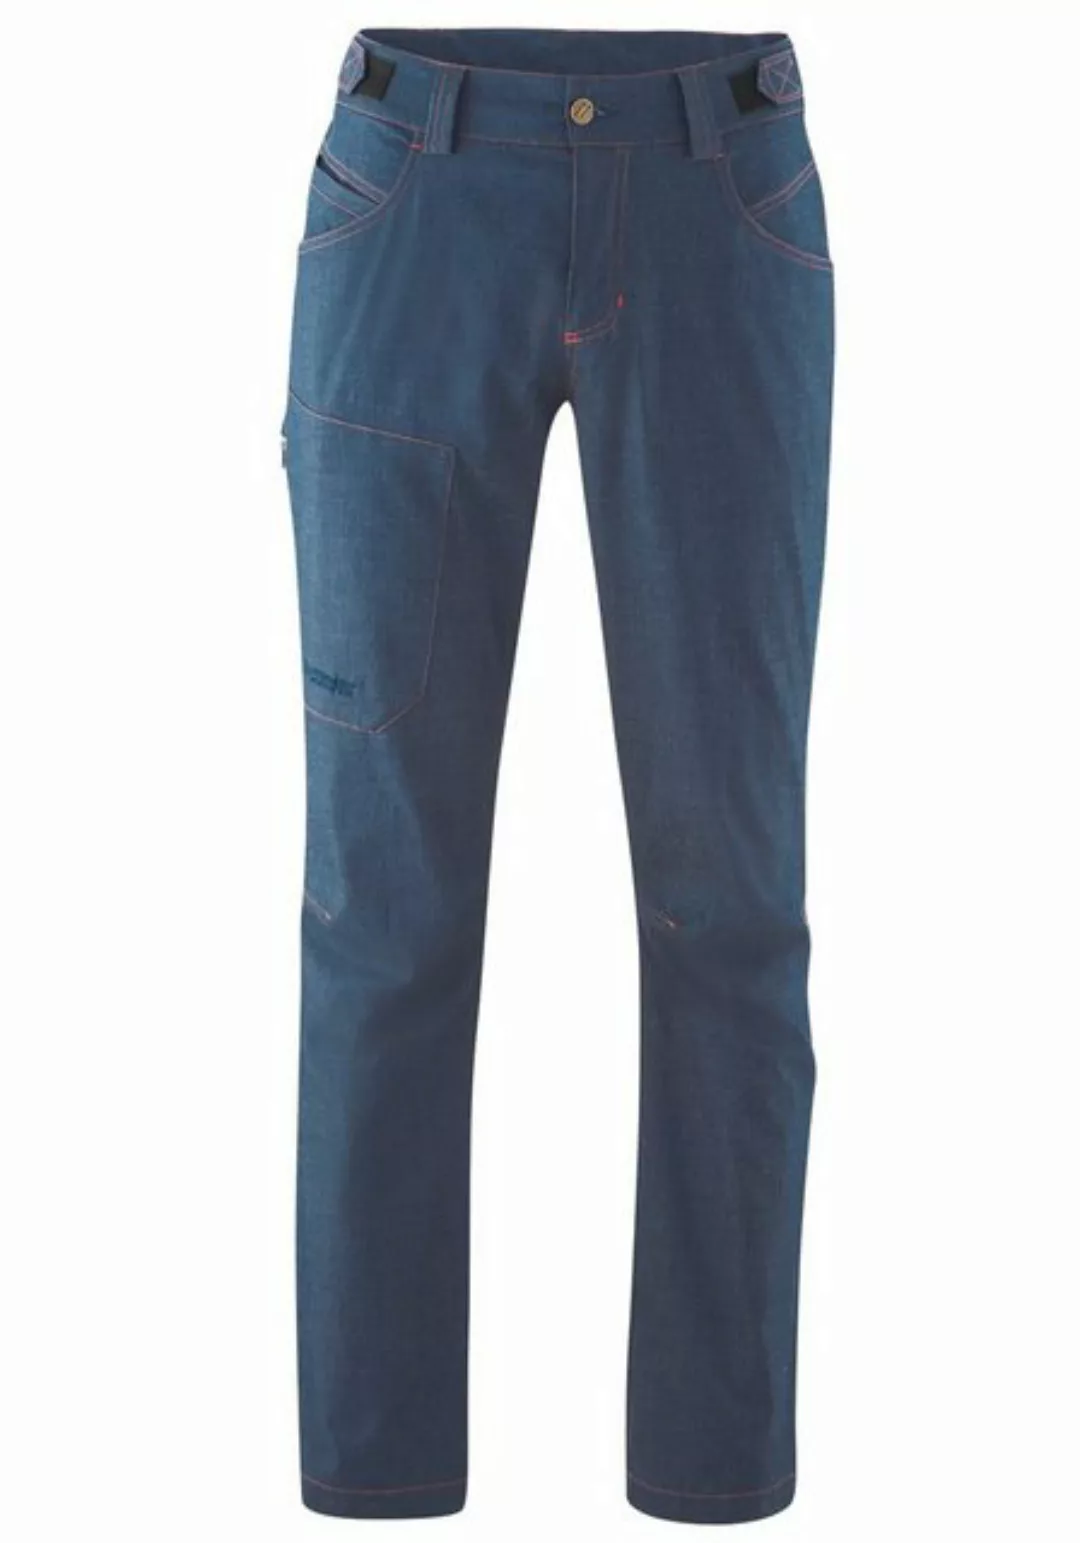 Maier Sports Funktionshose Pyrit 2.0 M Coole Outdoorhose im Jeans-Look günstig online kaufen